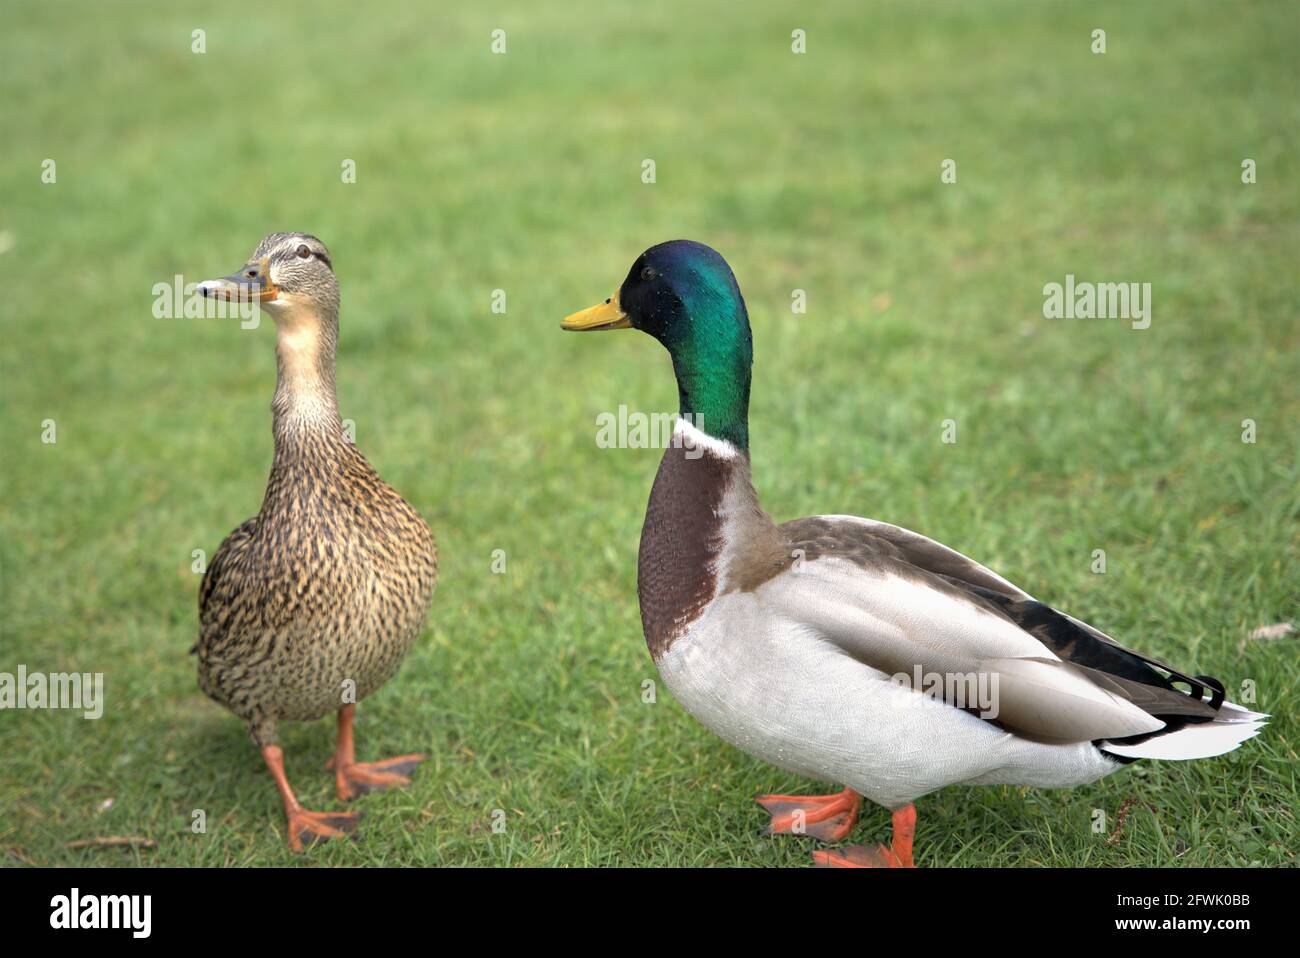 Ducks in the park Stock Photo